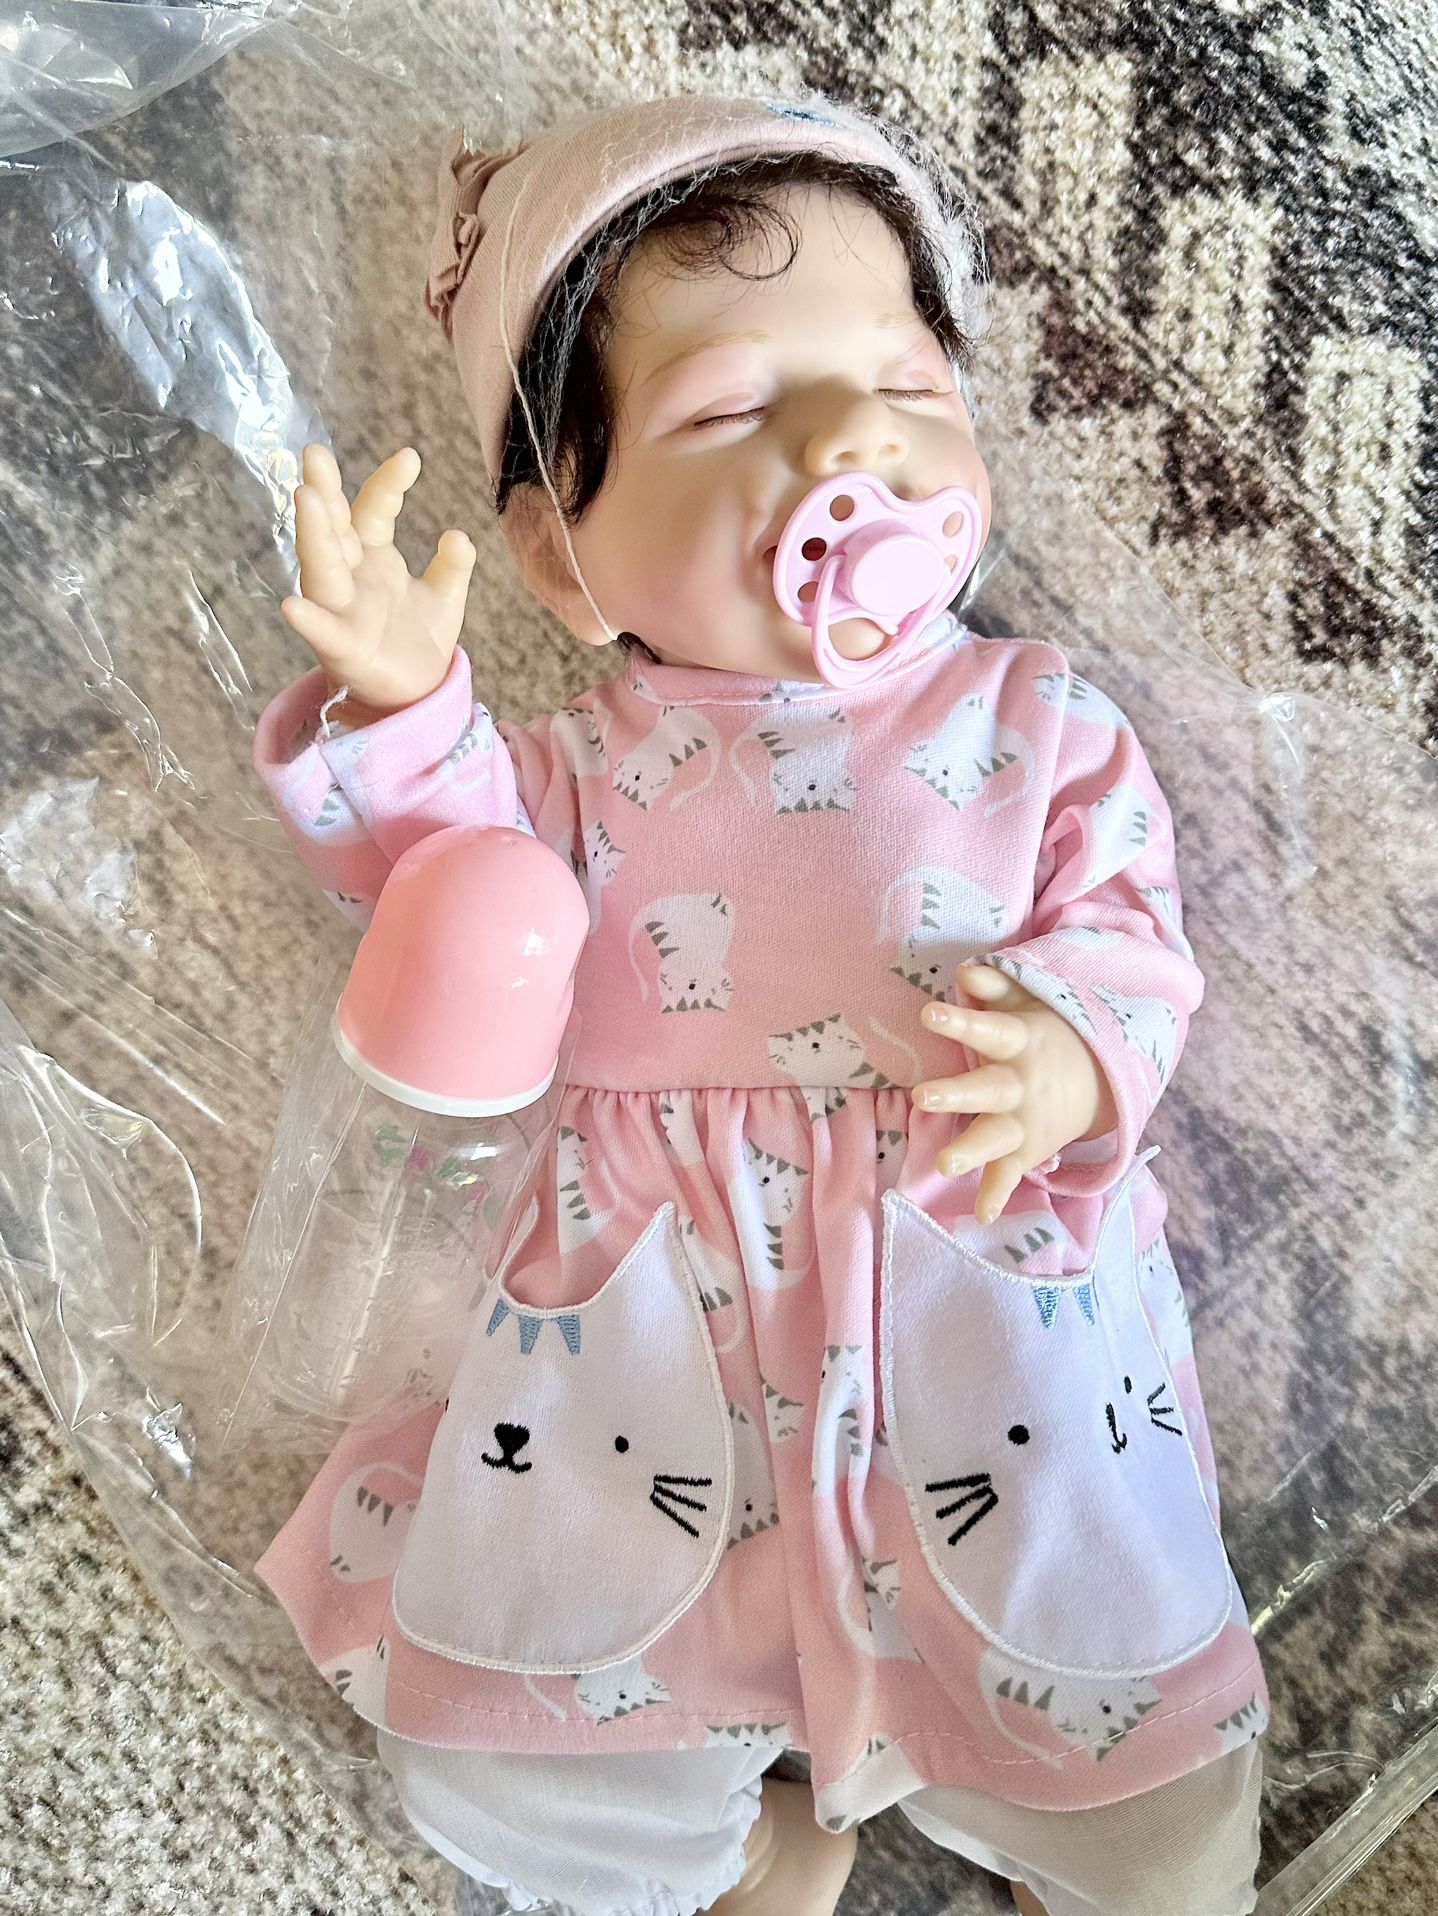 New Eurebao Realistic Reborn Baby Dolls 18inch Girl Toddler Full Vinyl Silicone